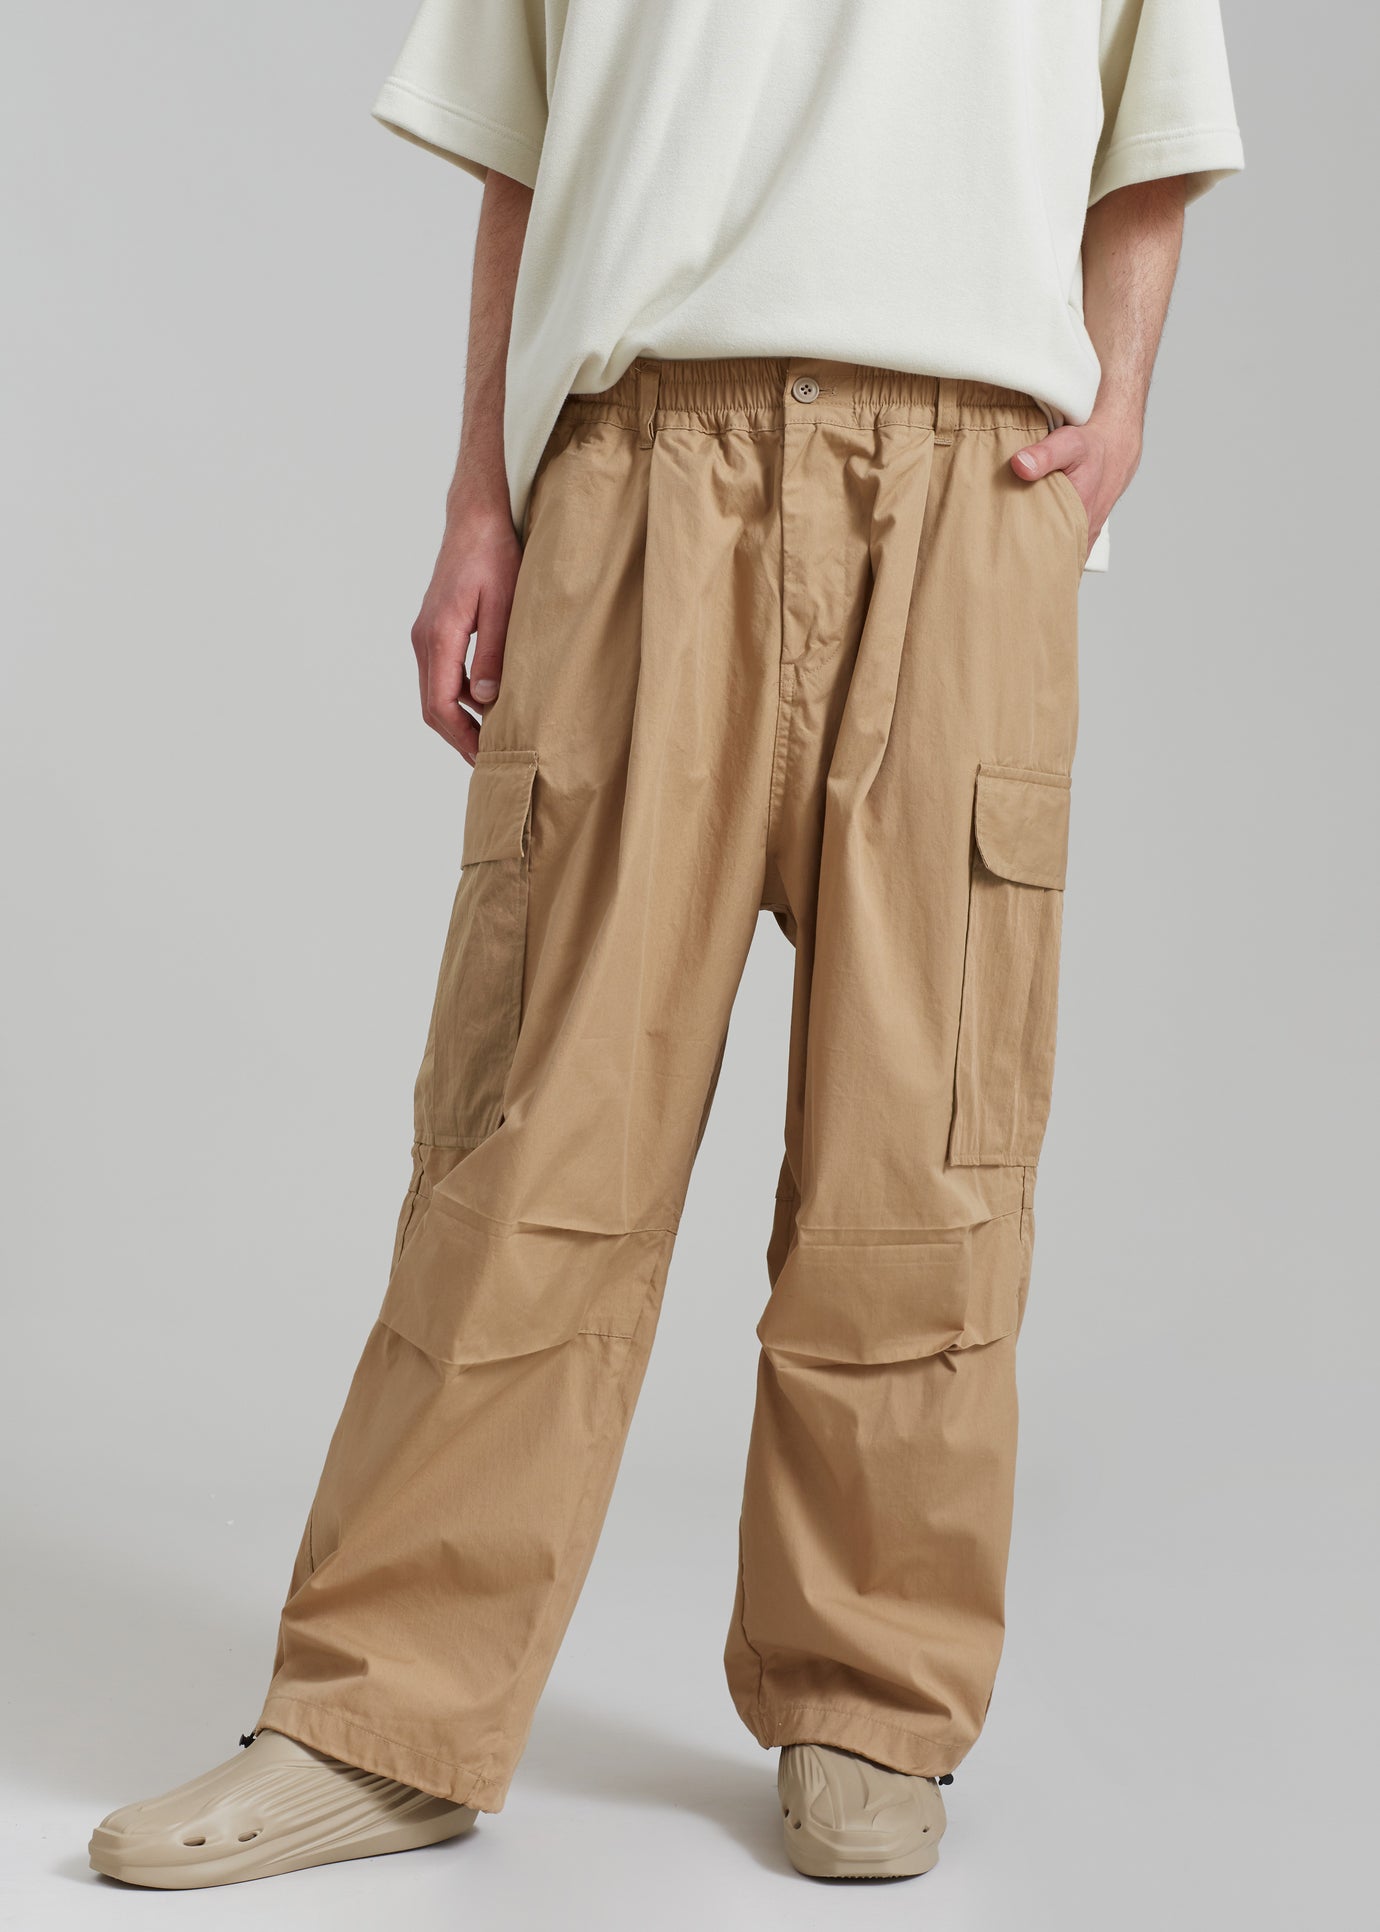 Stu Colorblock Cargo Pants - Tan